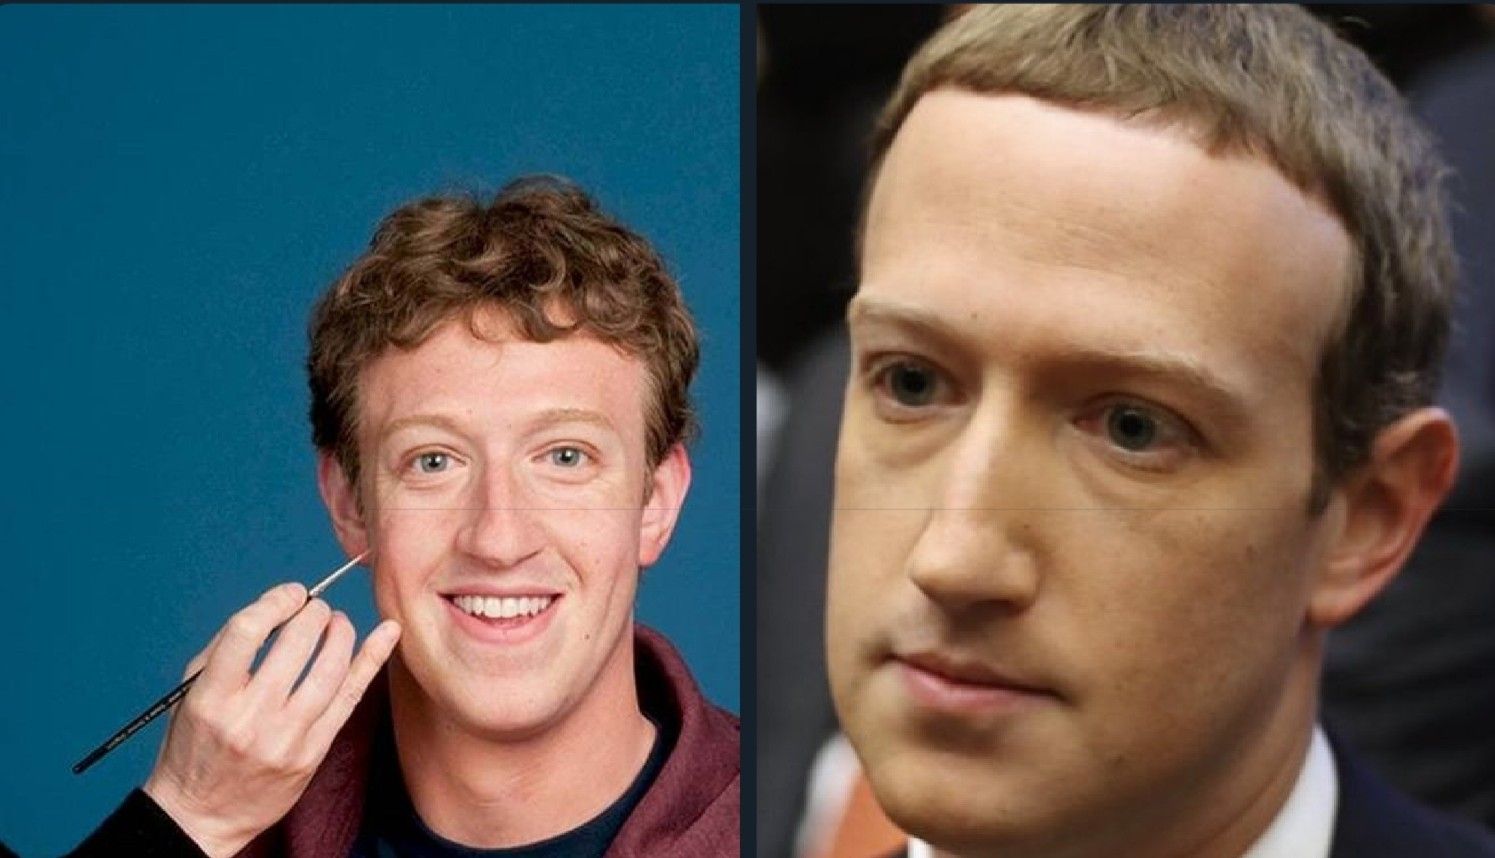 Wax model of Mark Zuckerberg looks more lifelike than the actual Mark Zuckerberg